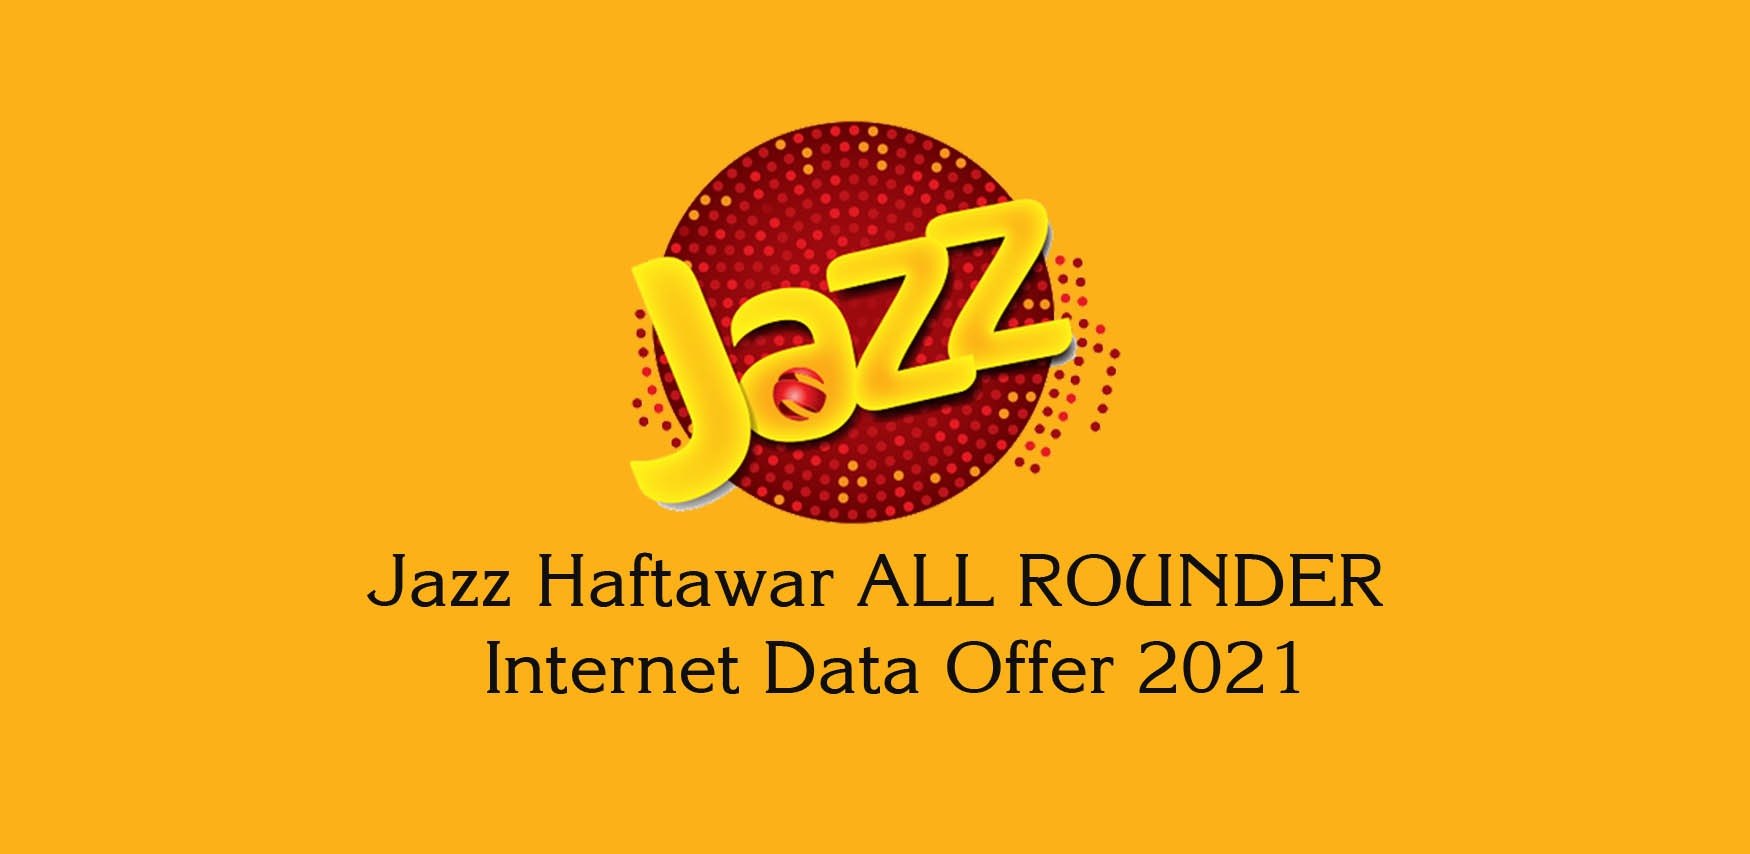 Jazz Haftawar ALL ROUNDER Internet Data Offer 2021